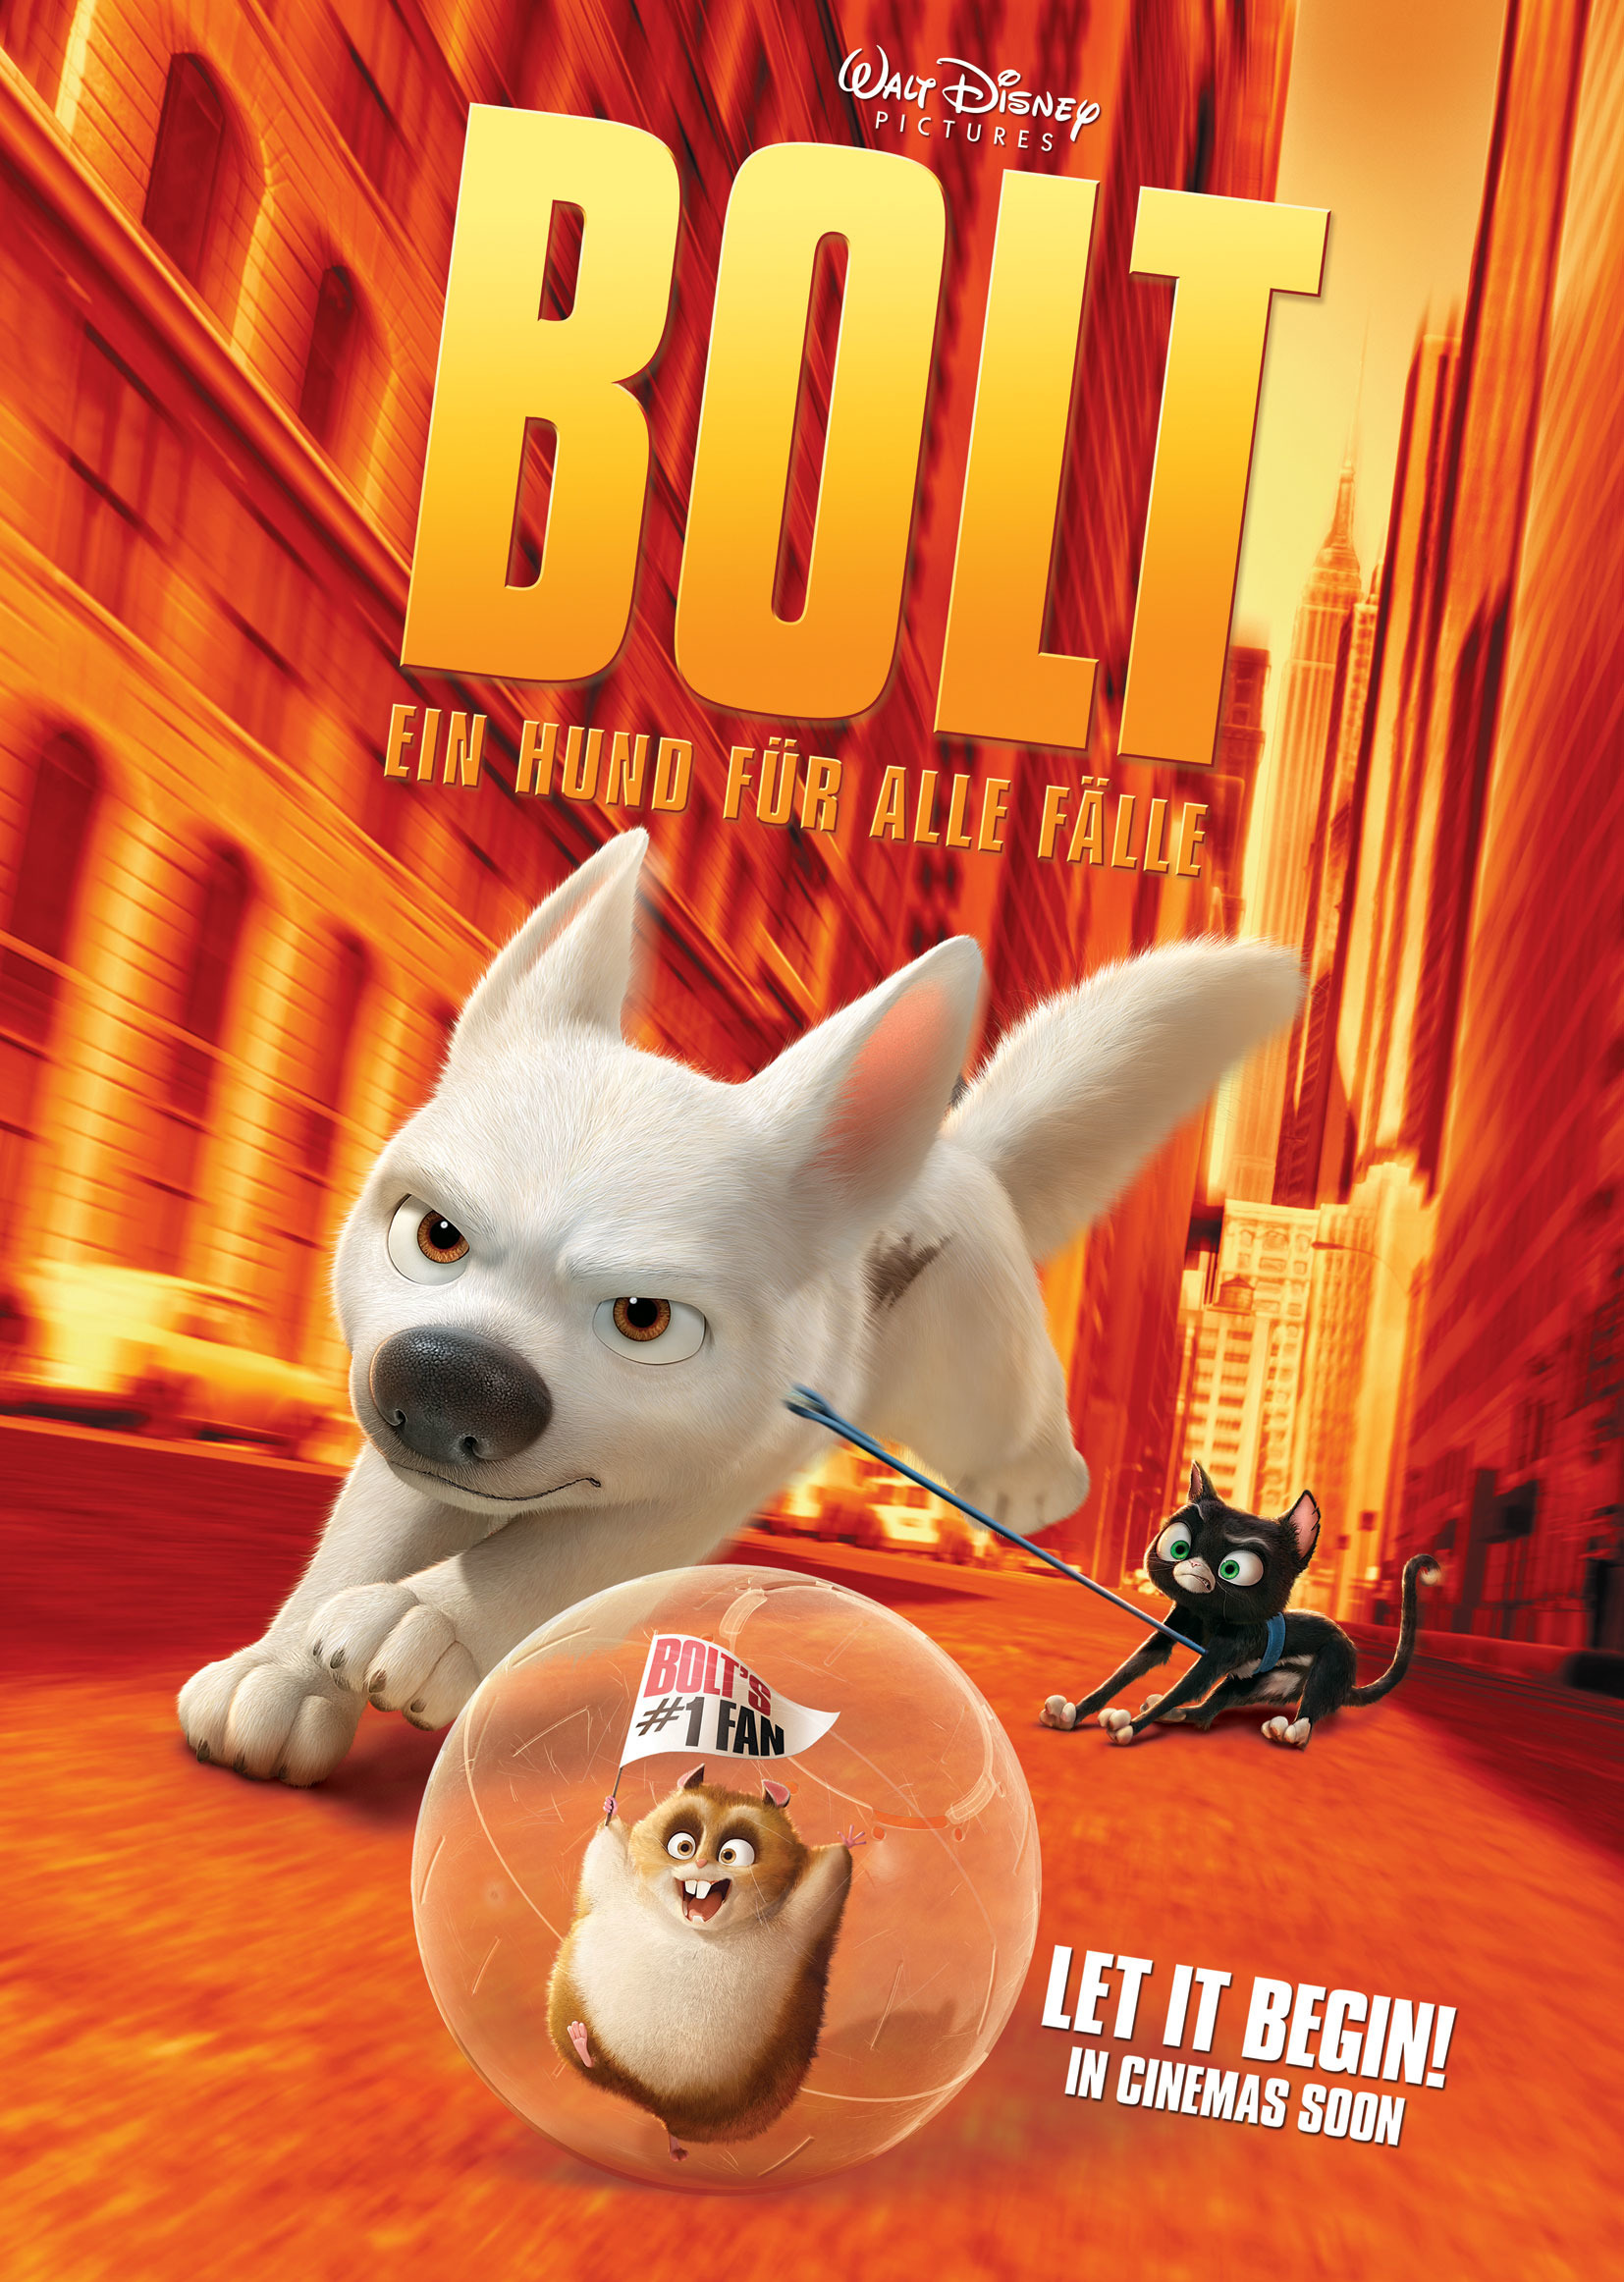 Mega Sized Movie Poster Image for Bolt (#3 of 4)